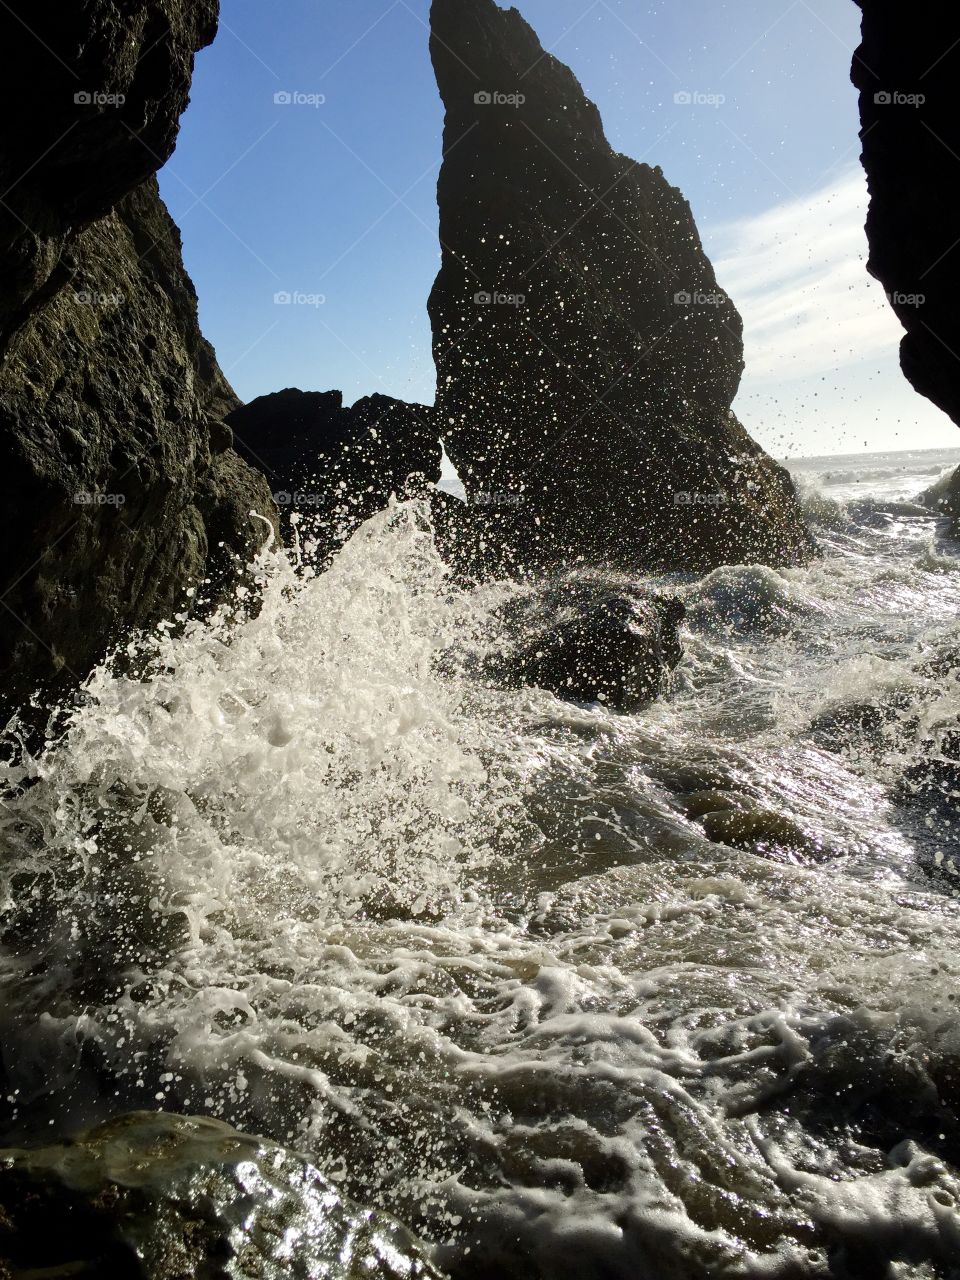 Waves crashing into the rocks